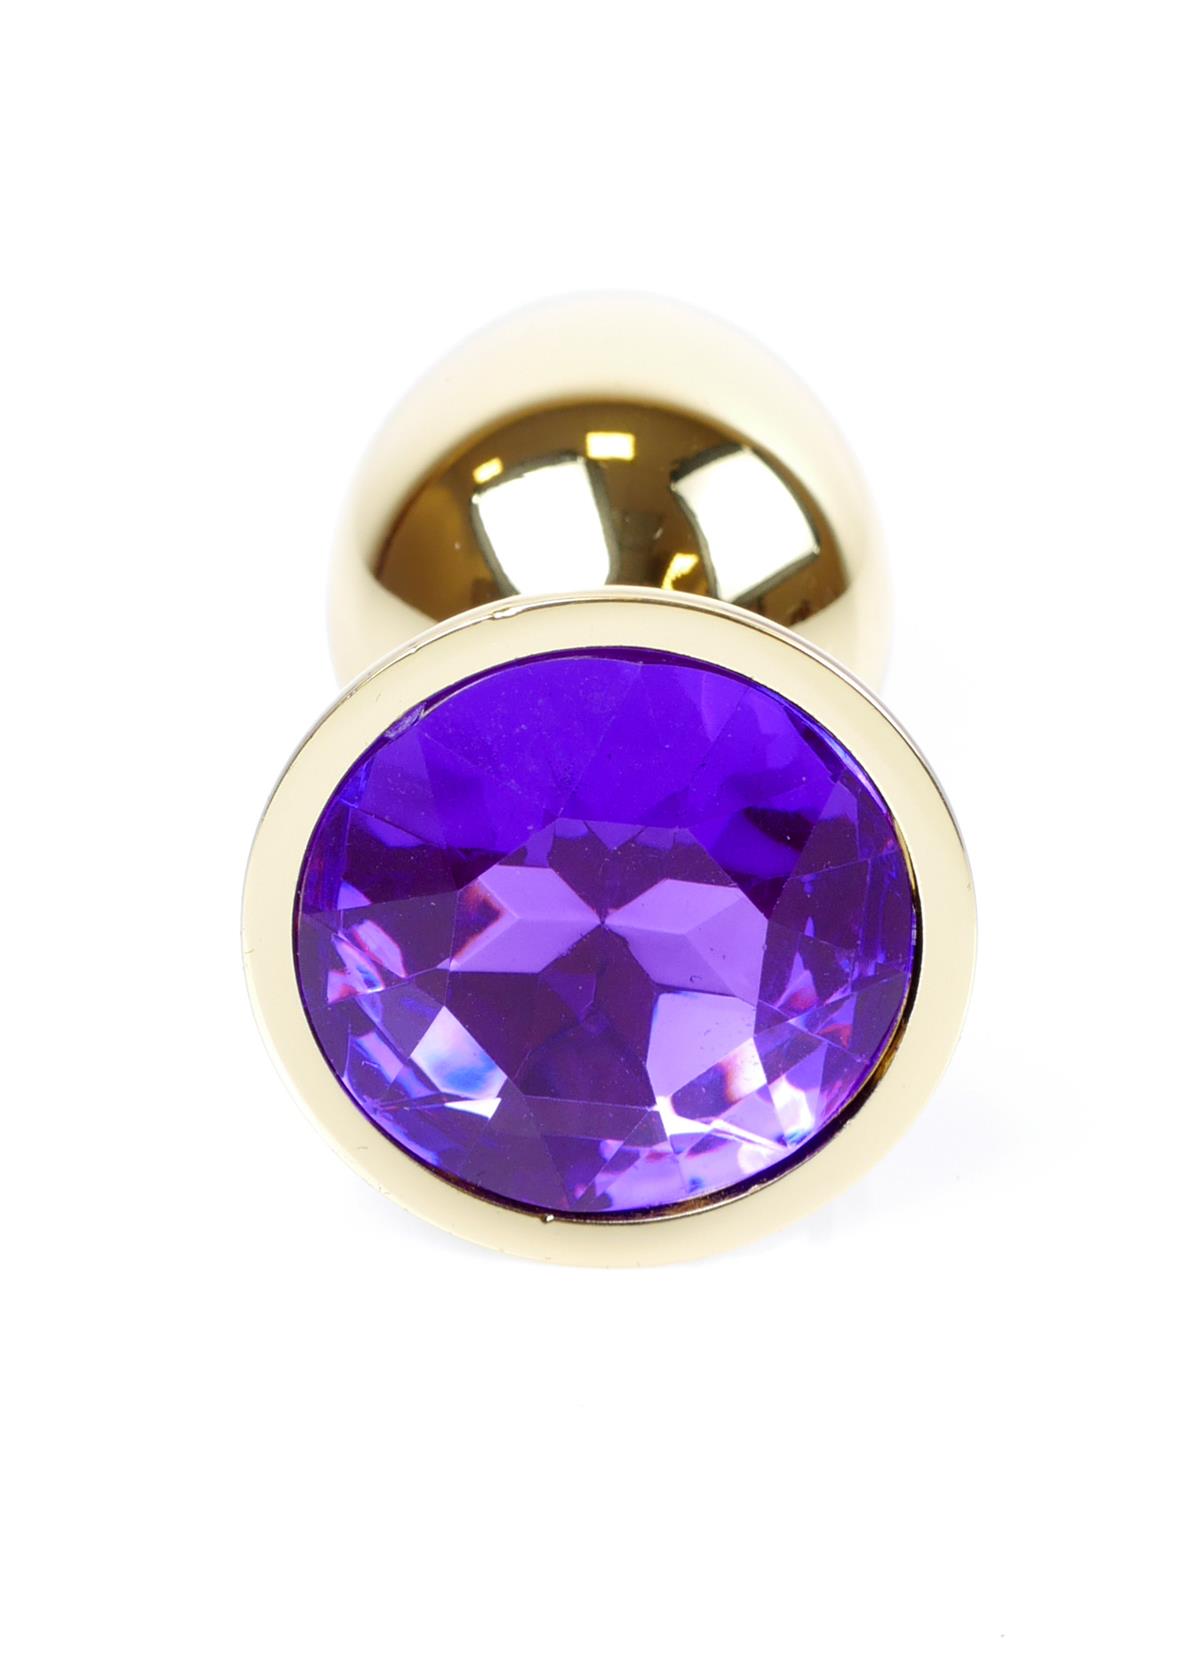 Bossoftoys - 64-00025 - Plug - Gold - Anal - Purple stone - attractive colour window box